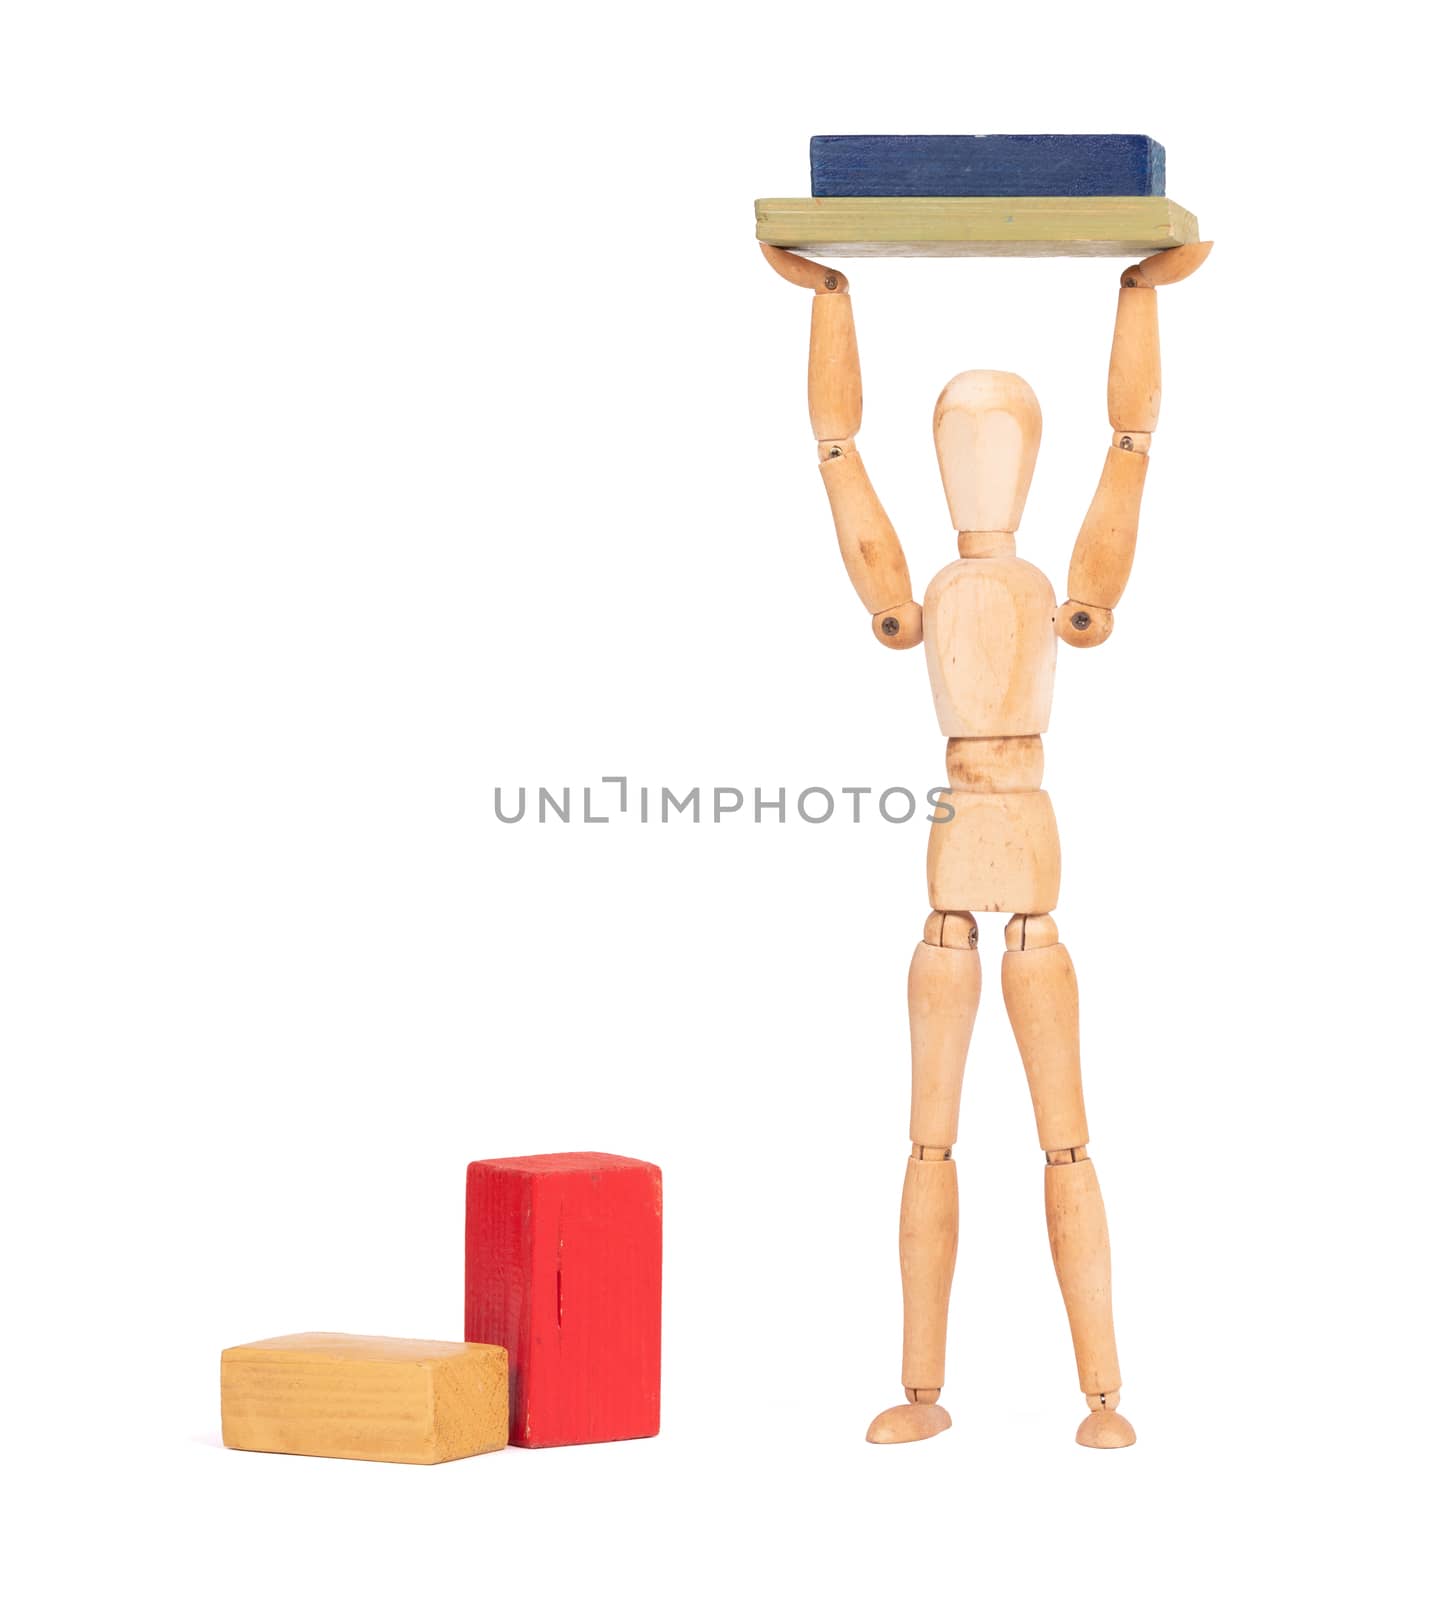 Wooden mannequin carrying wooden blocks by michaklootwijk